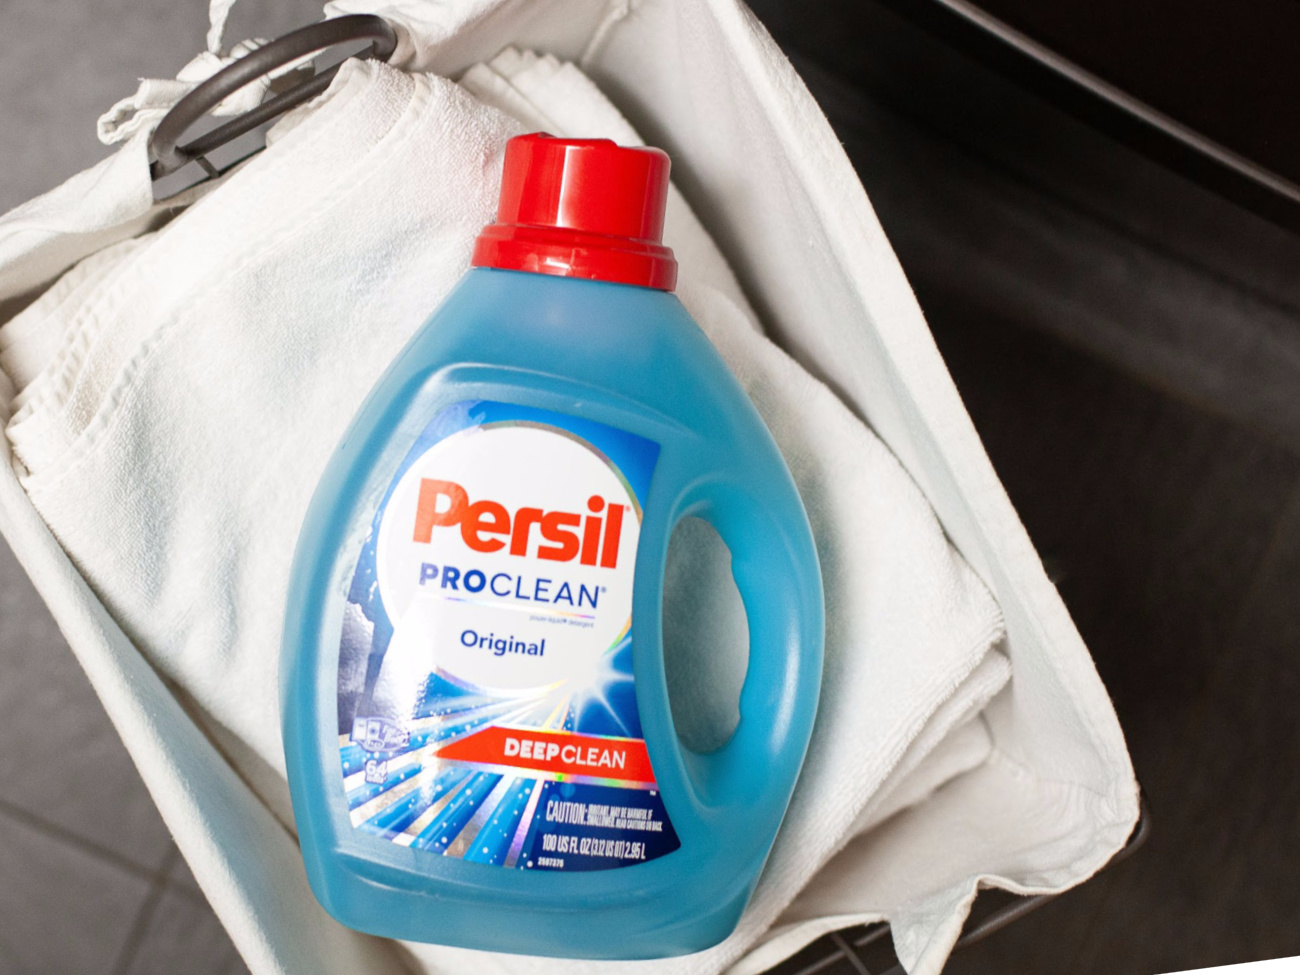 Get Persil Detergent As Low As $7.49 At Publix (Regular Price $14.99)